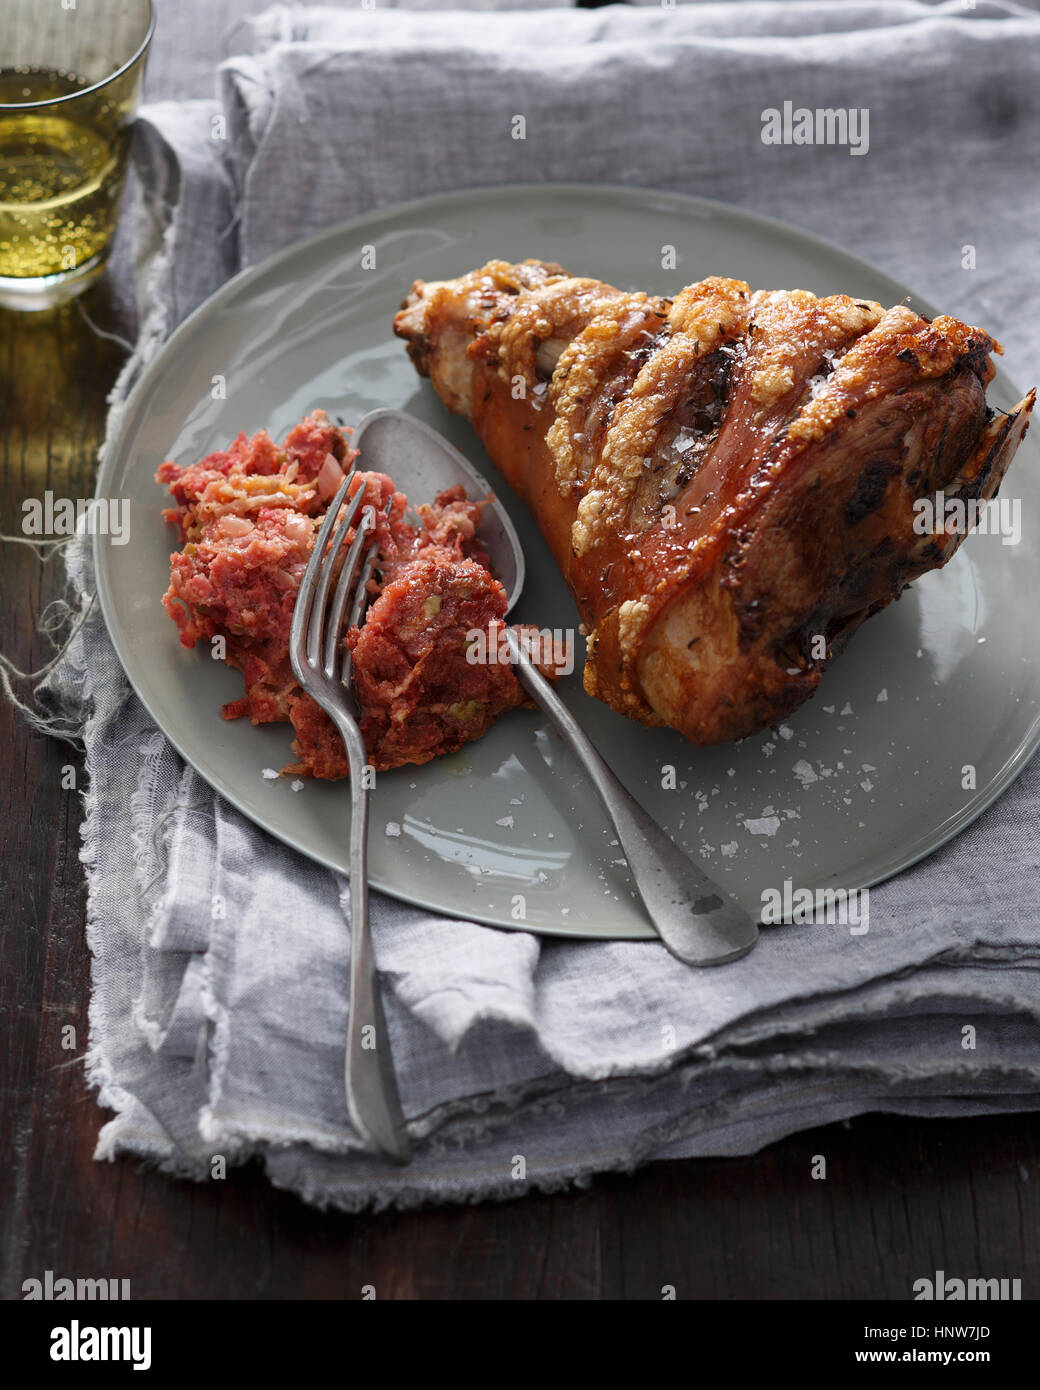 Roast pork hock on plate, close-up Stock Photo